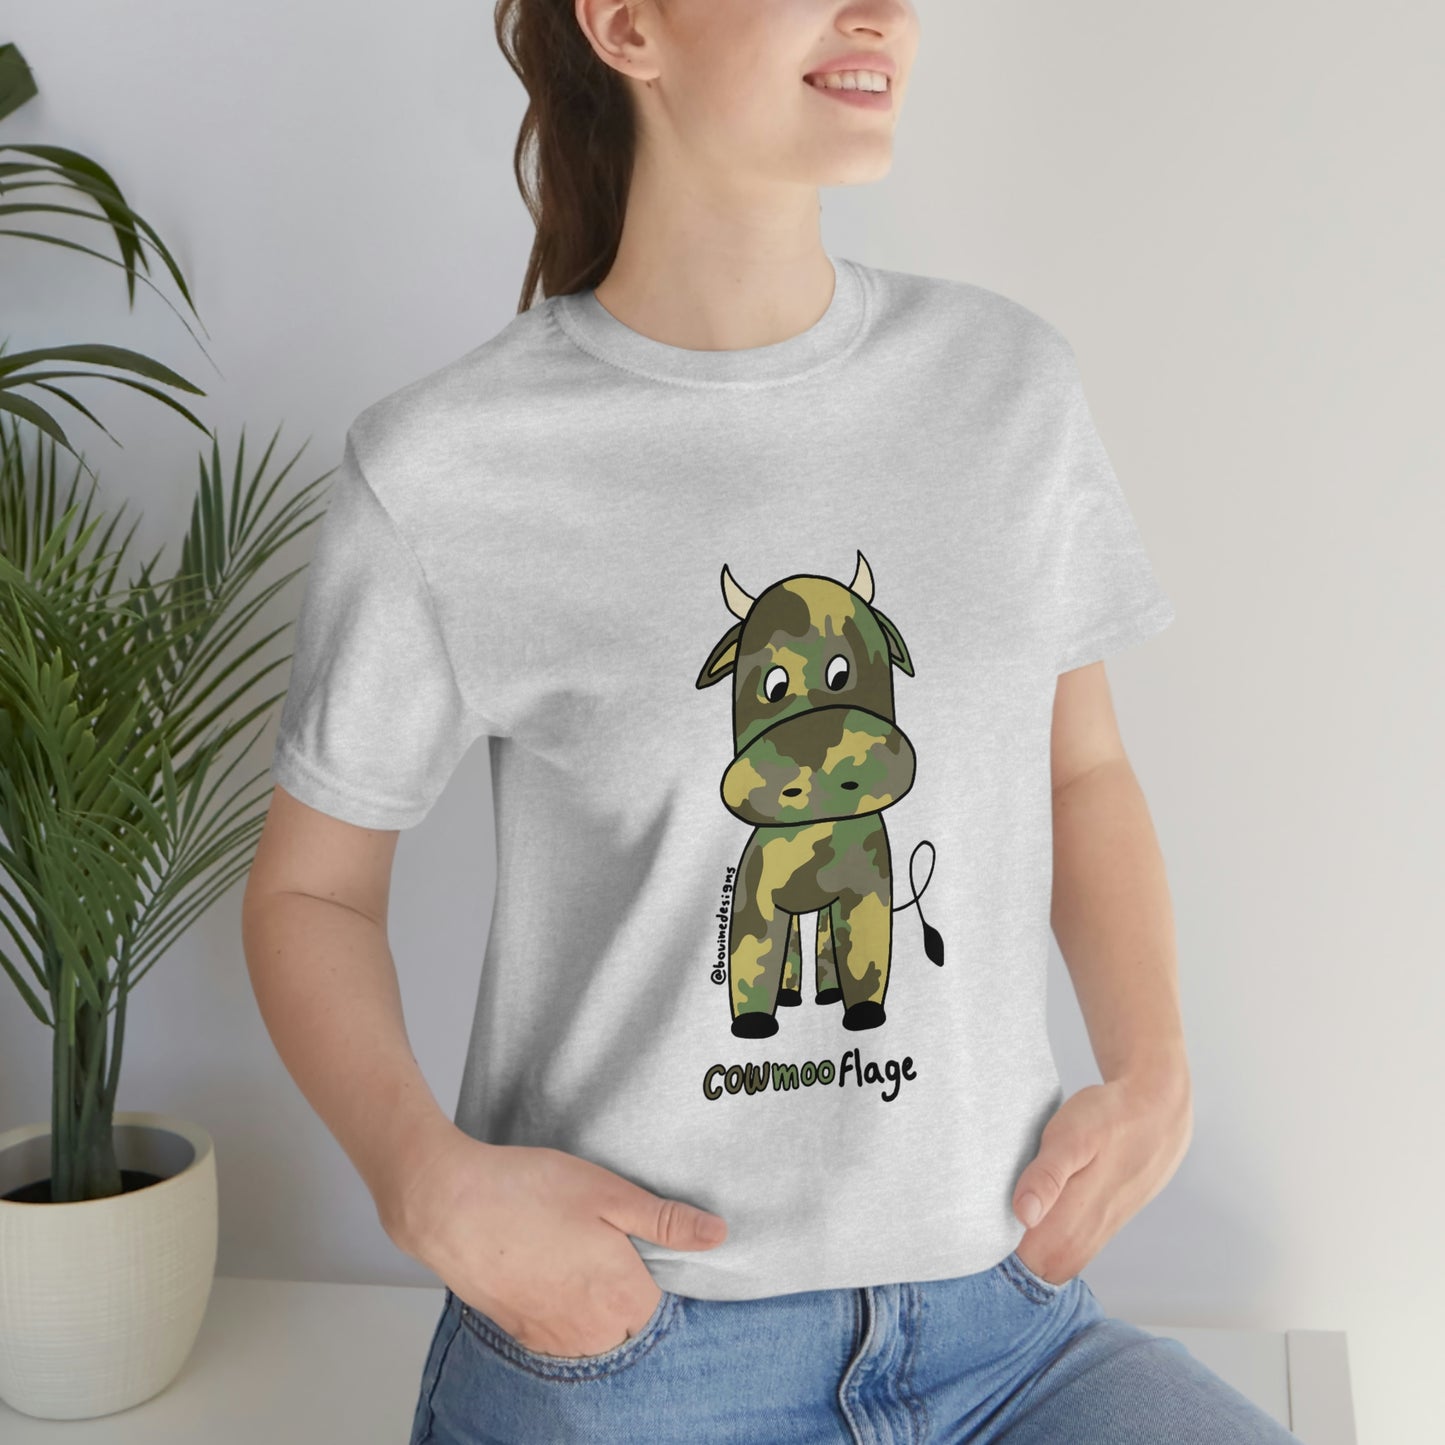 Cowmooflage T-Shirt